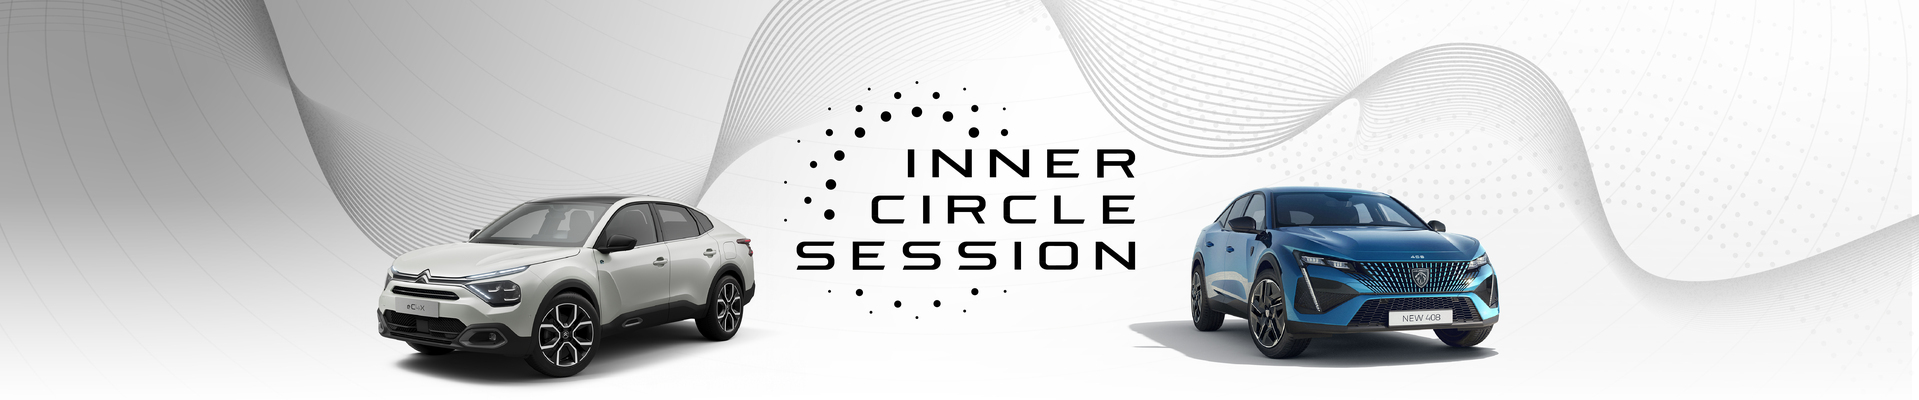 Inner Circle Session - Dealermeeting